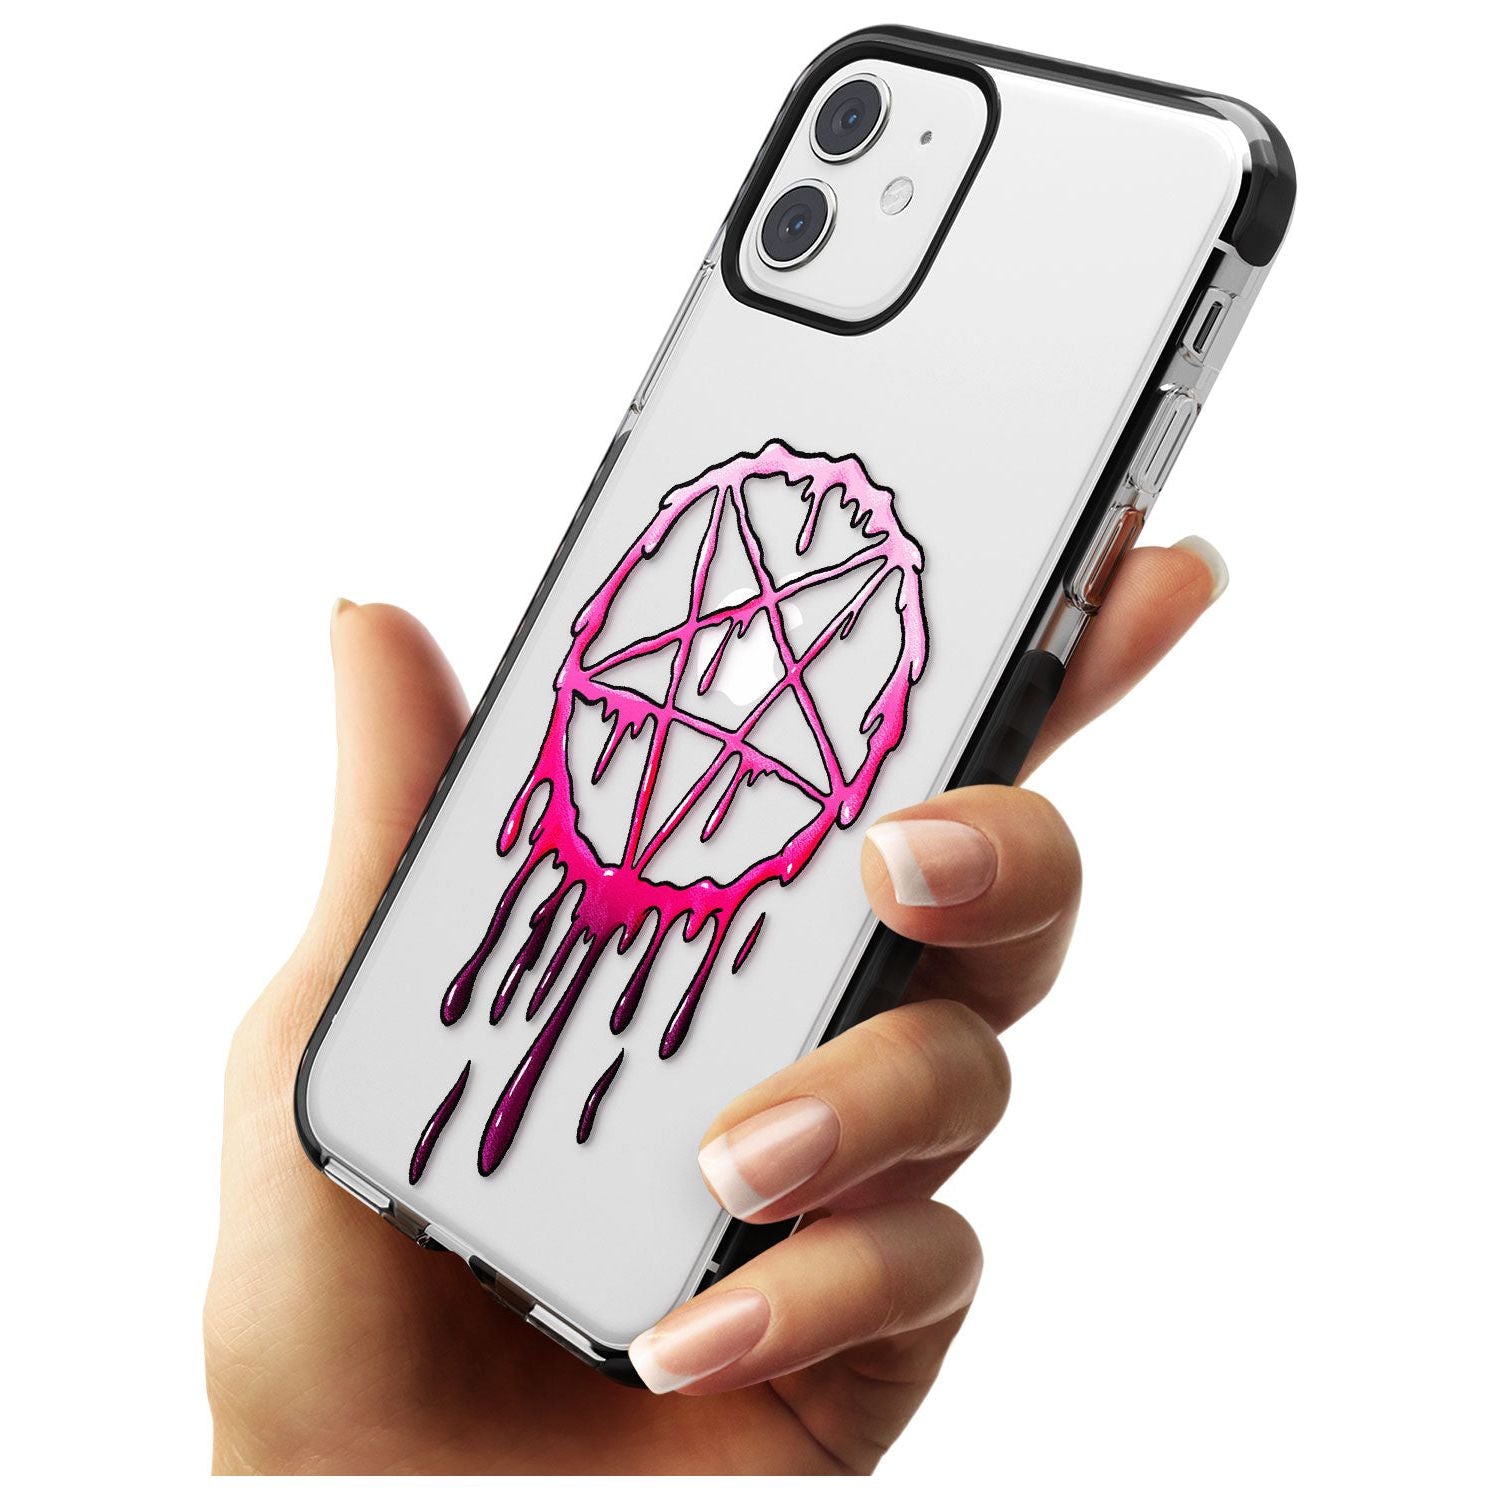 Pentagram of Blood Black Impact Phone Case for iPhone 11 Pro Max